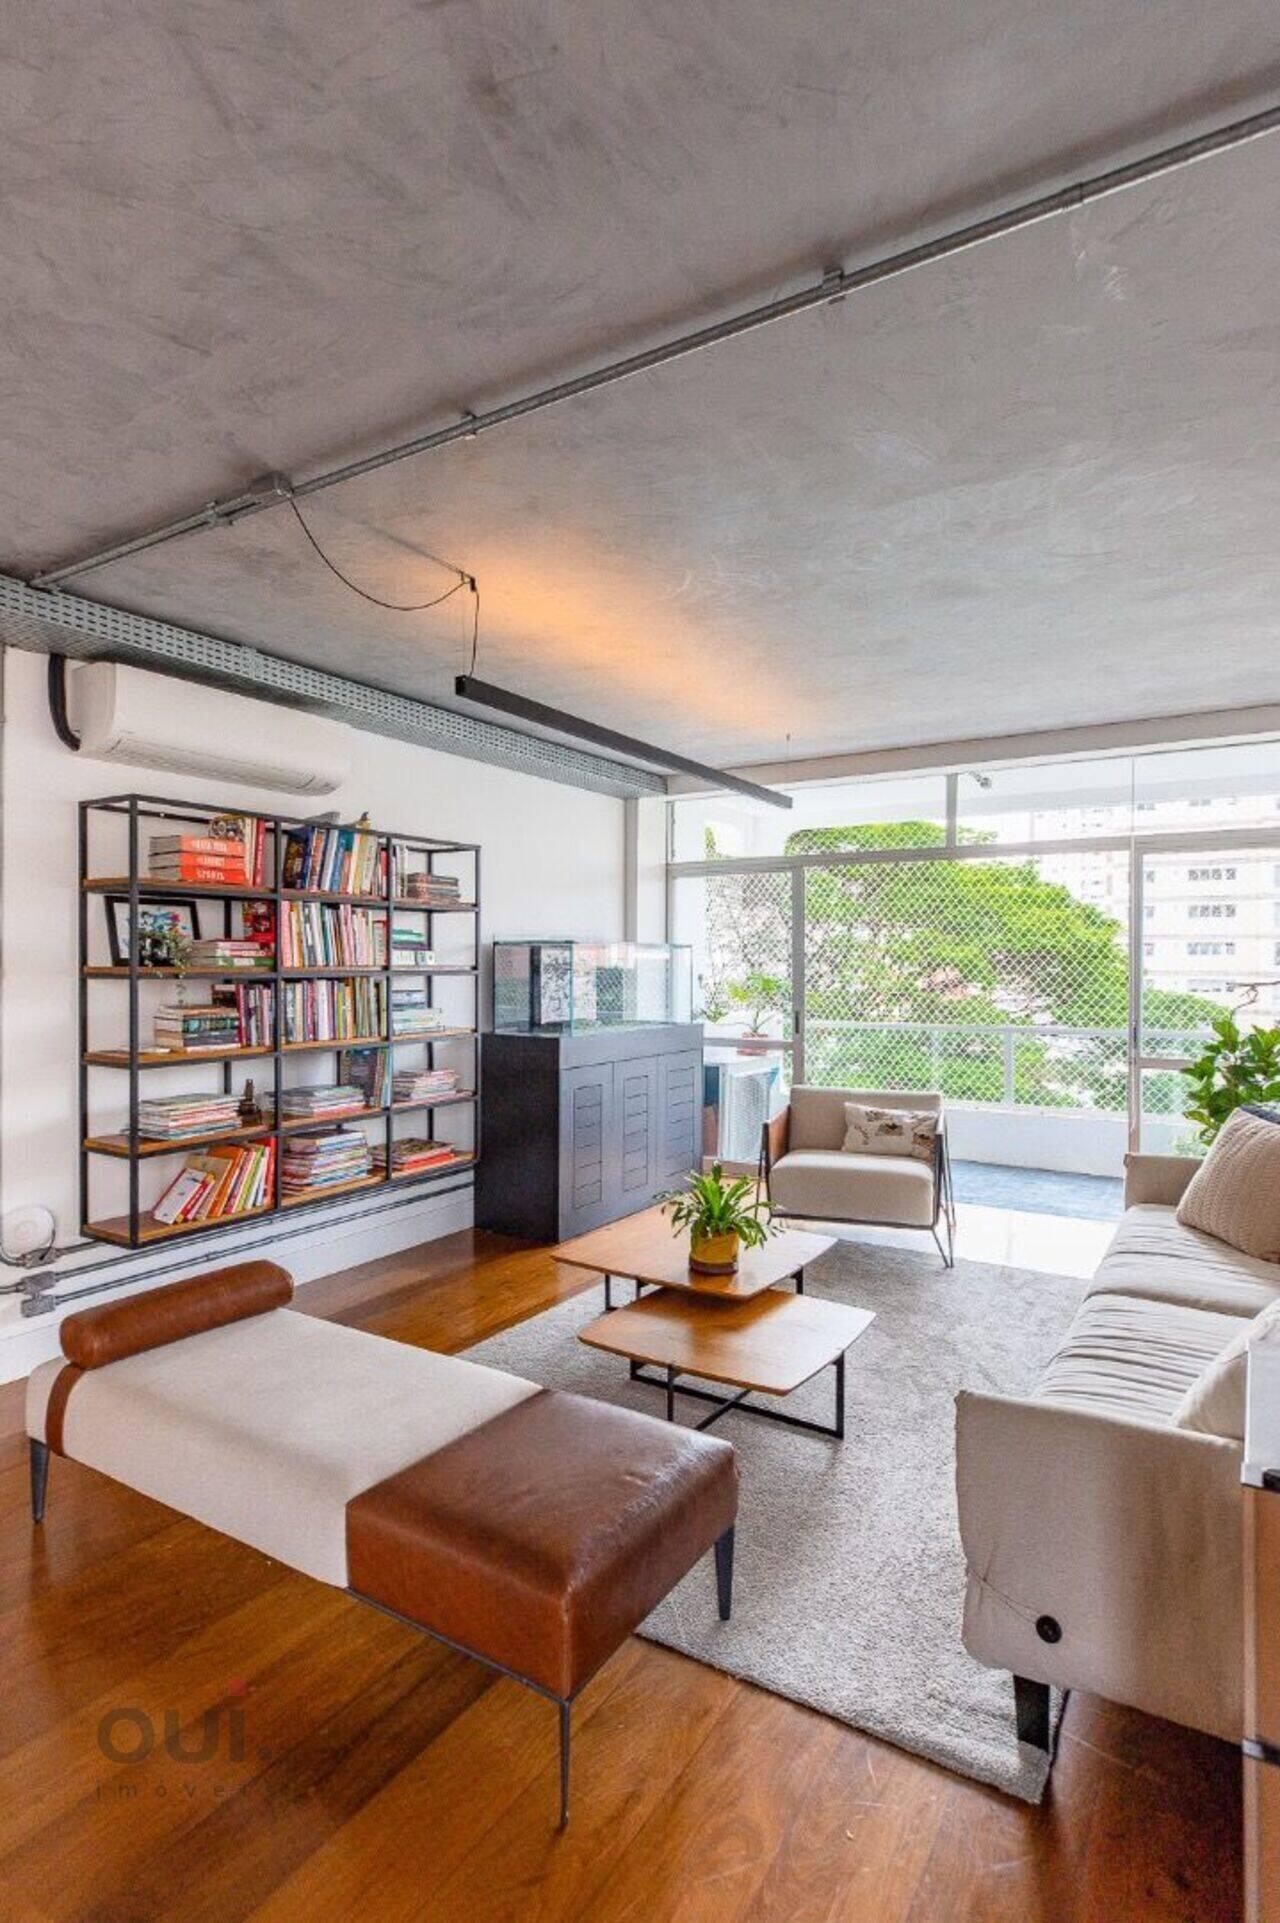 Apartamento Brooklin Paulista, São Paulo - SP